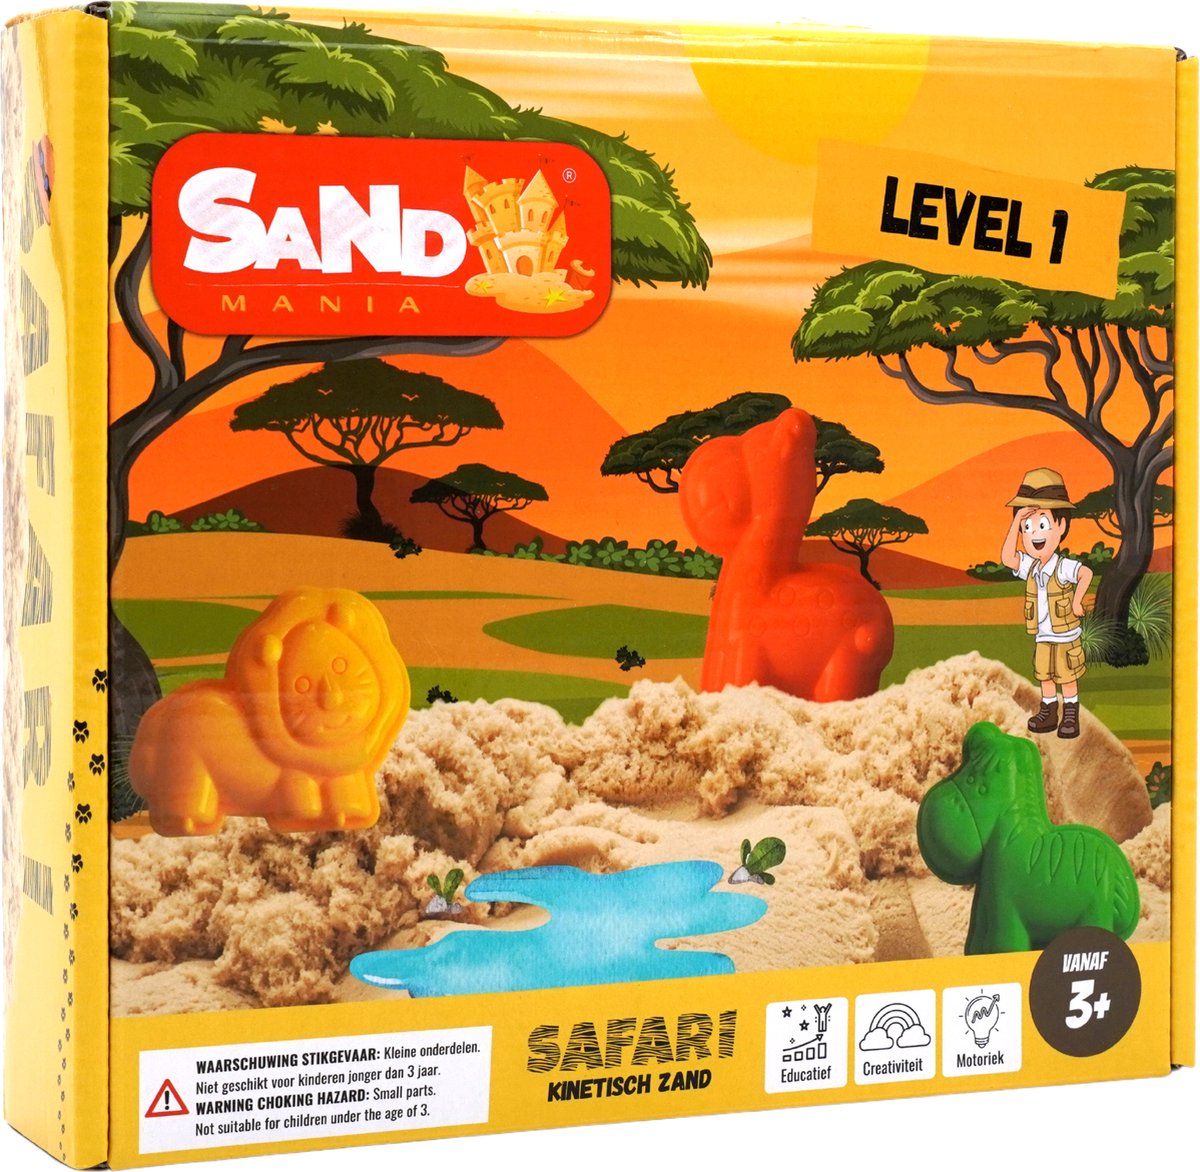 Sand mania® - Kinetisch zand - Safari level 1 box - 1 kg bruin magisch zand - Speelzand - Magic sand - Montessori speelgoed